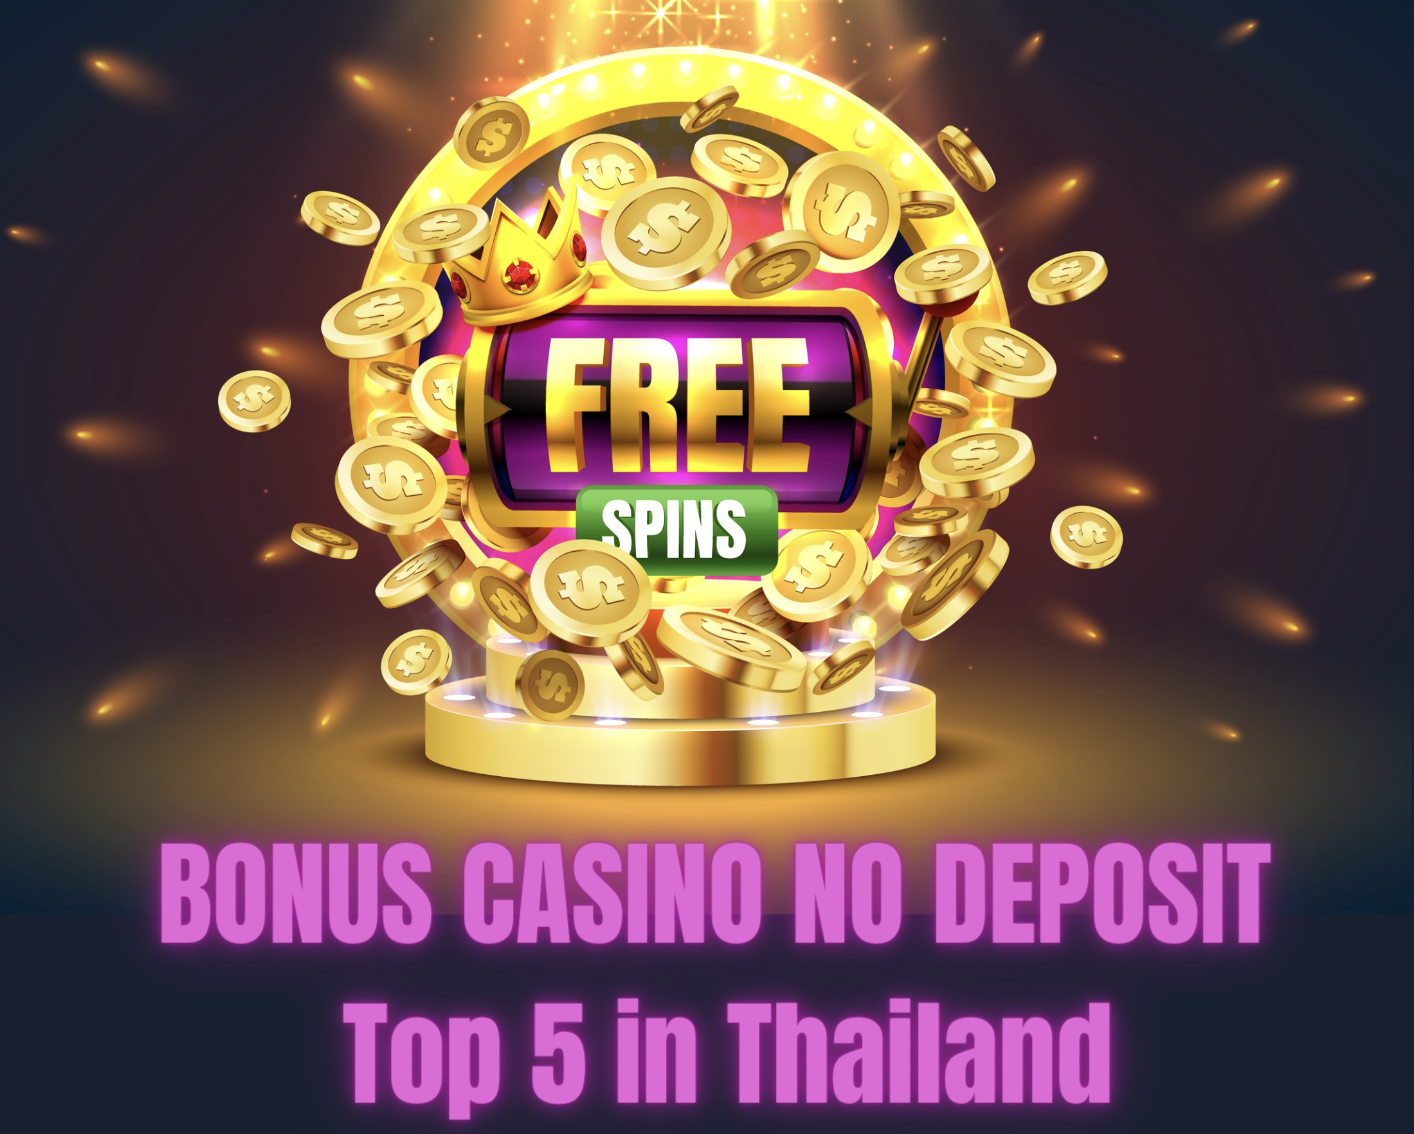 Unleash the Fun with Twister Wins Casino No Deposit Bonus - Claim Your Free Rewards Now!